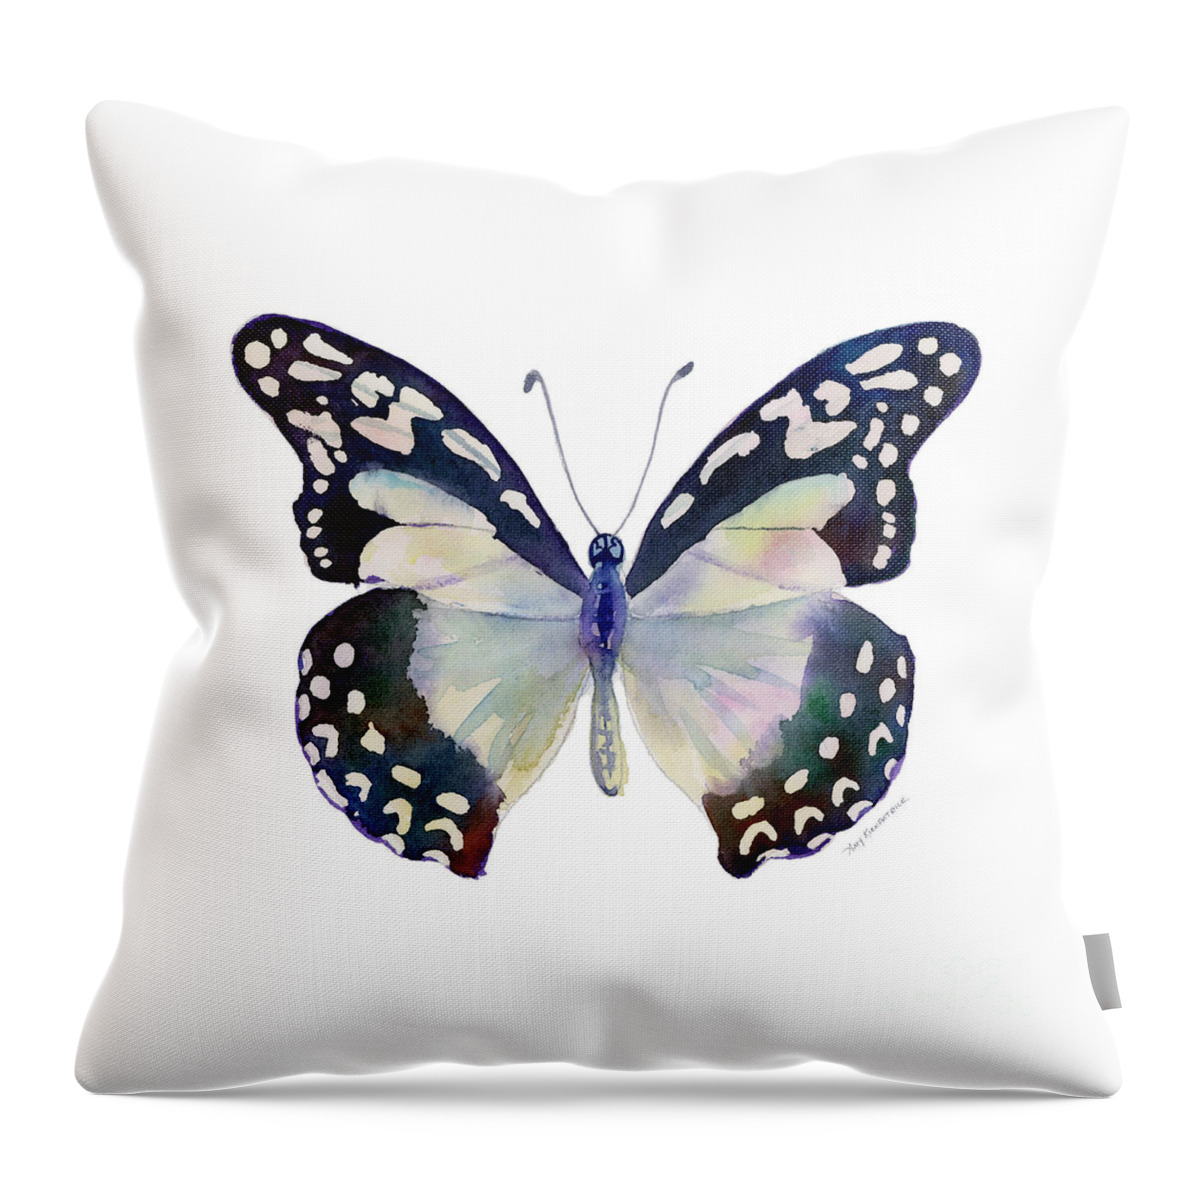 Angola White Lady Butterfly Throw Pillow featuring the painting 90 Angola White Lady Butterfly by Amy Kirkpatrick